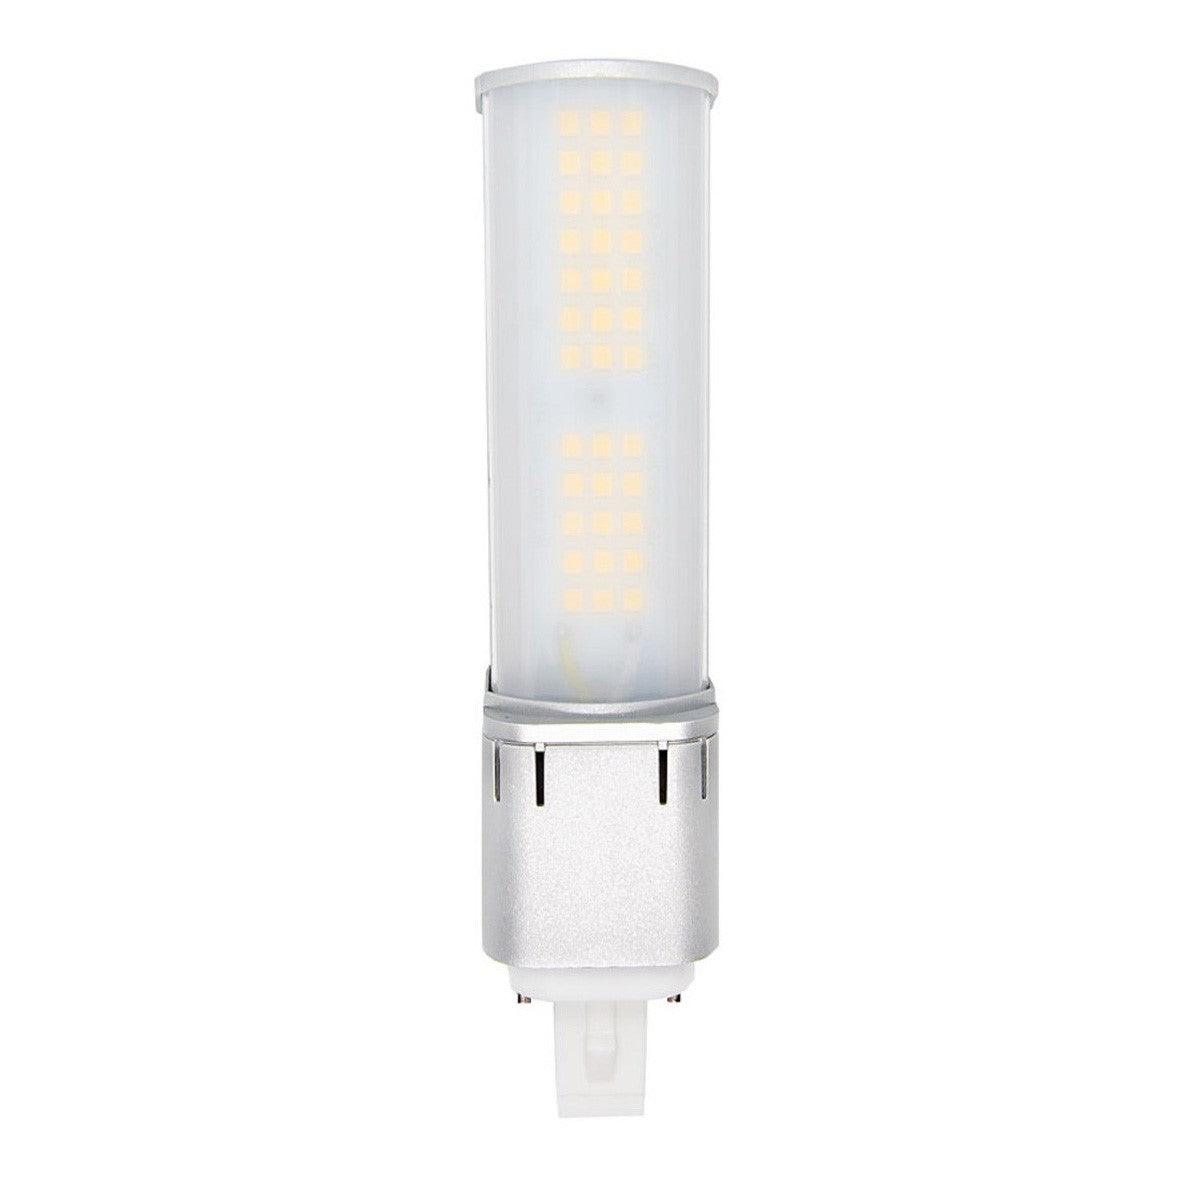 2 pin PL LED Bulb, 7 Watt 840 Lumens, 2700K, Horizontal, Replaces 13W CFL, G23 Base, Direct Or Bypass